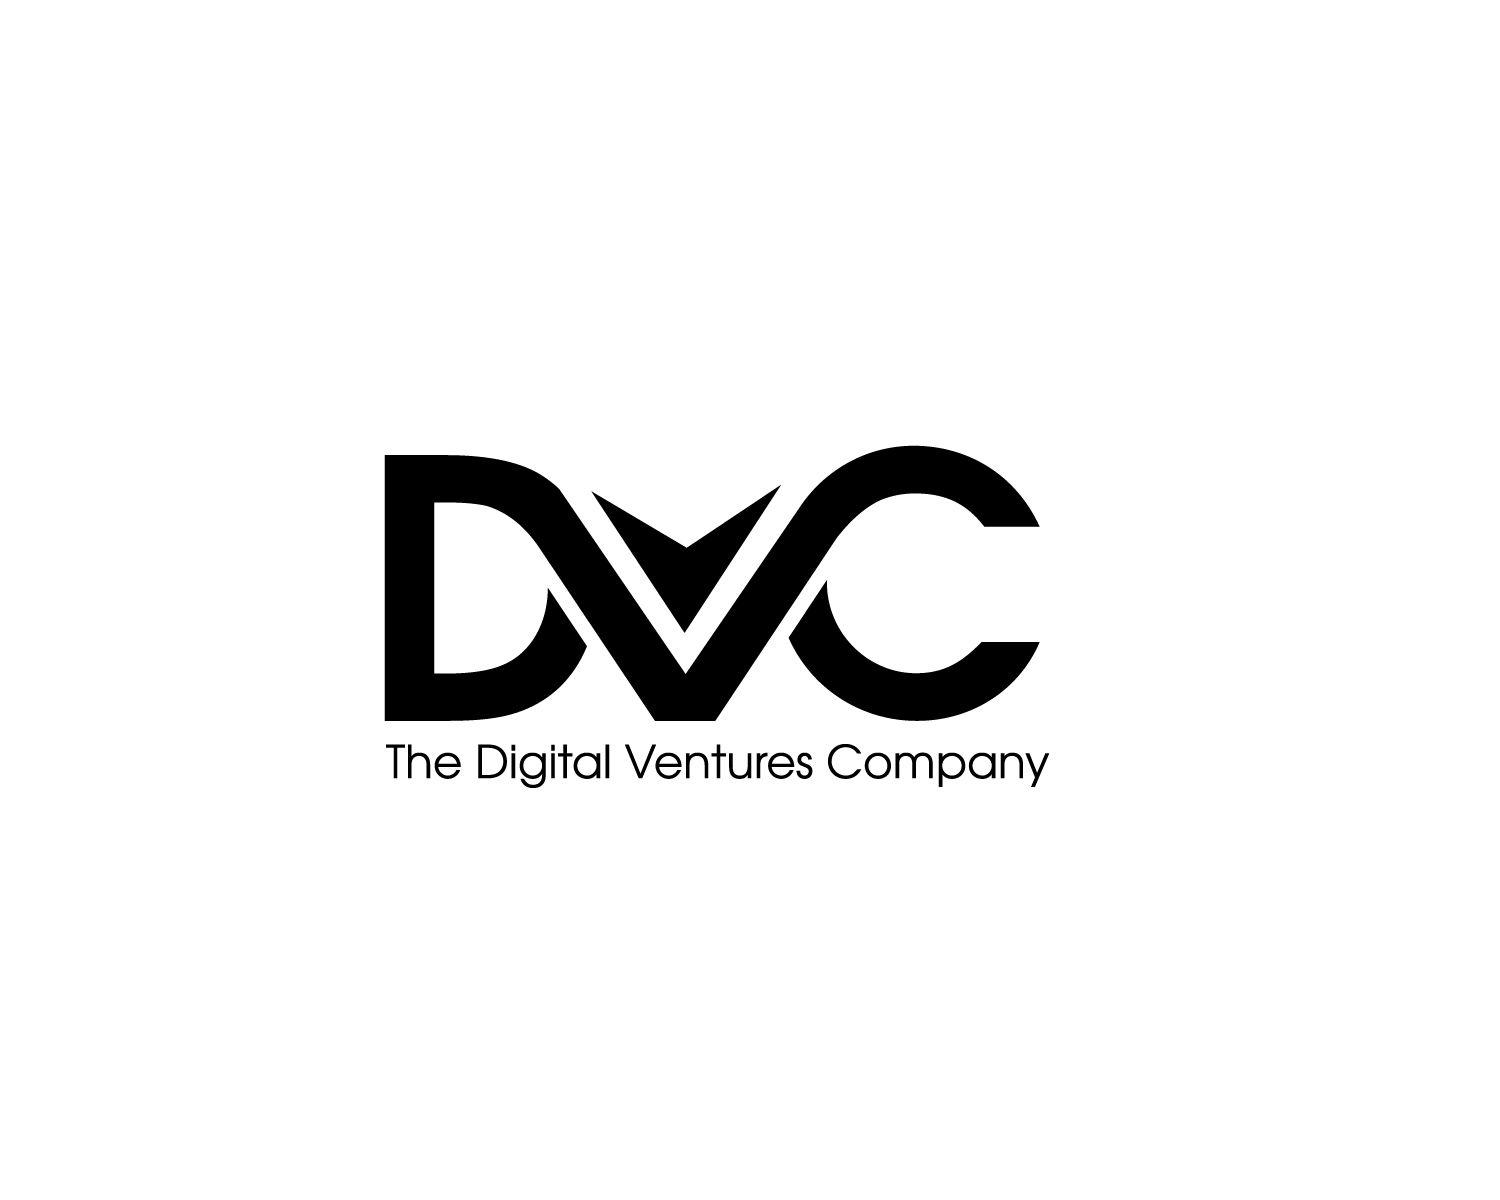 DVC Logo - Professional, Upmarket, Business Logo Design for The Digital ...